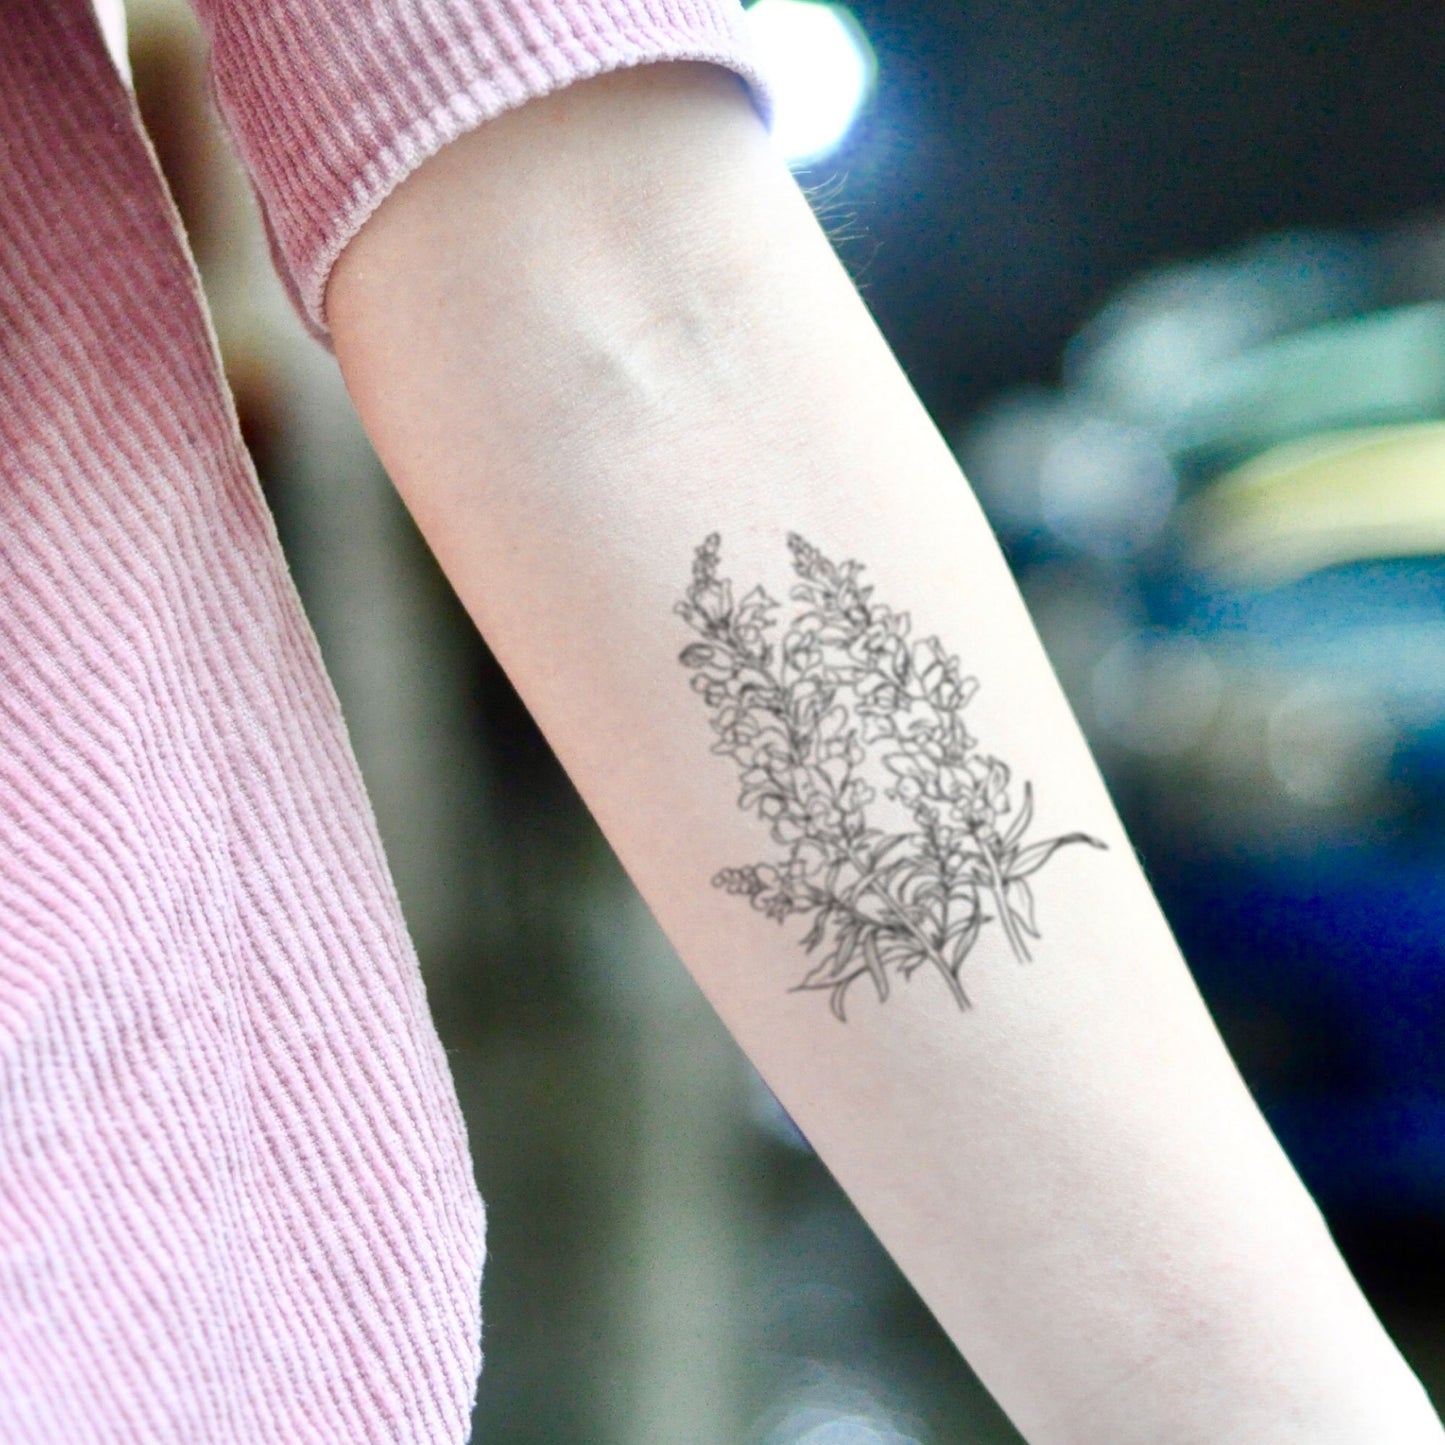 fake small snapdragon simple botanical flower temporary tattoo sticker design idea on inner arm